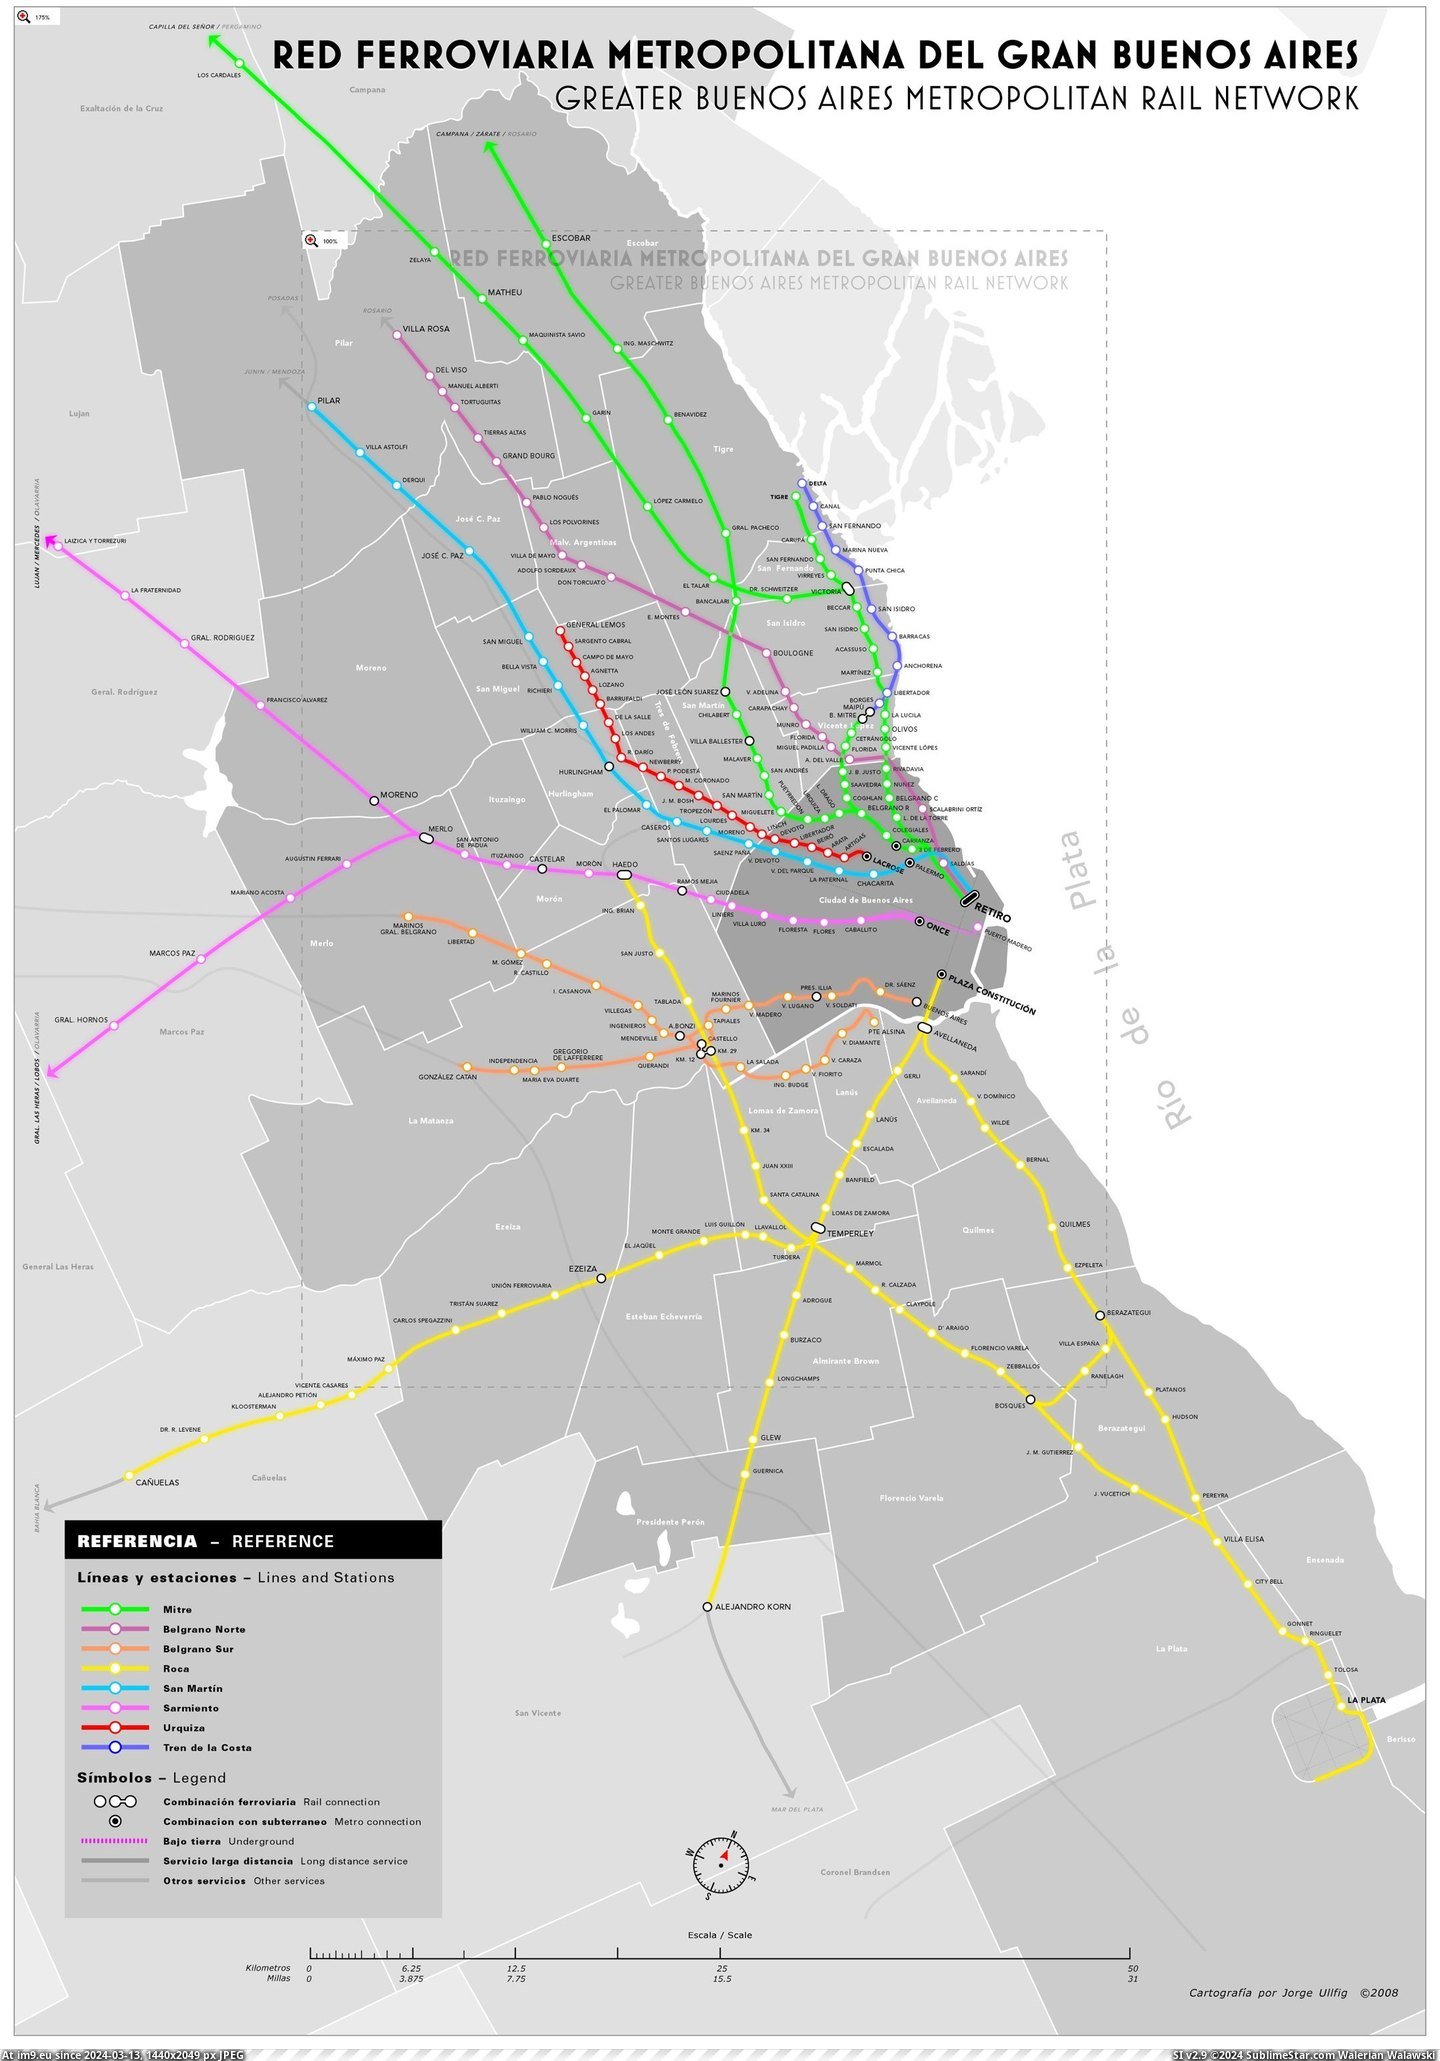 #Metropolitan #Network #Buenos #Aires #Rail #Greater [Mapporn] Greater Buenos Aires Metropolitan Rail Network [2160x3086] Pic. (Bild von album My r/MAPS favs))